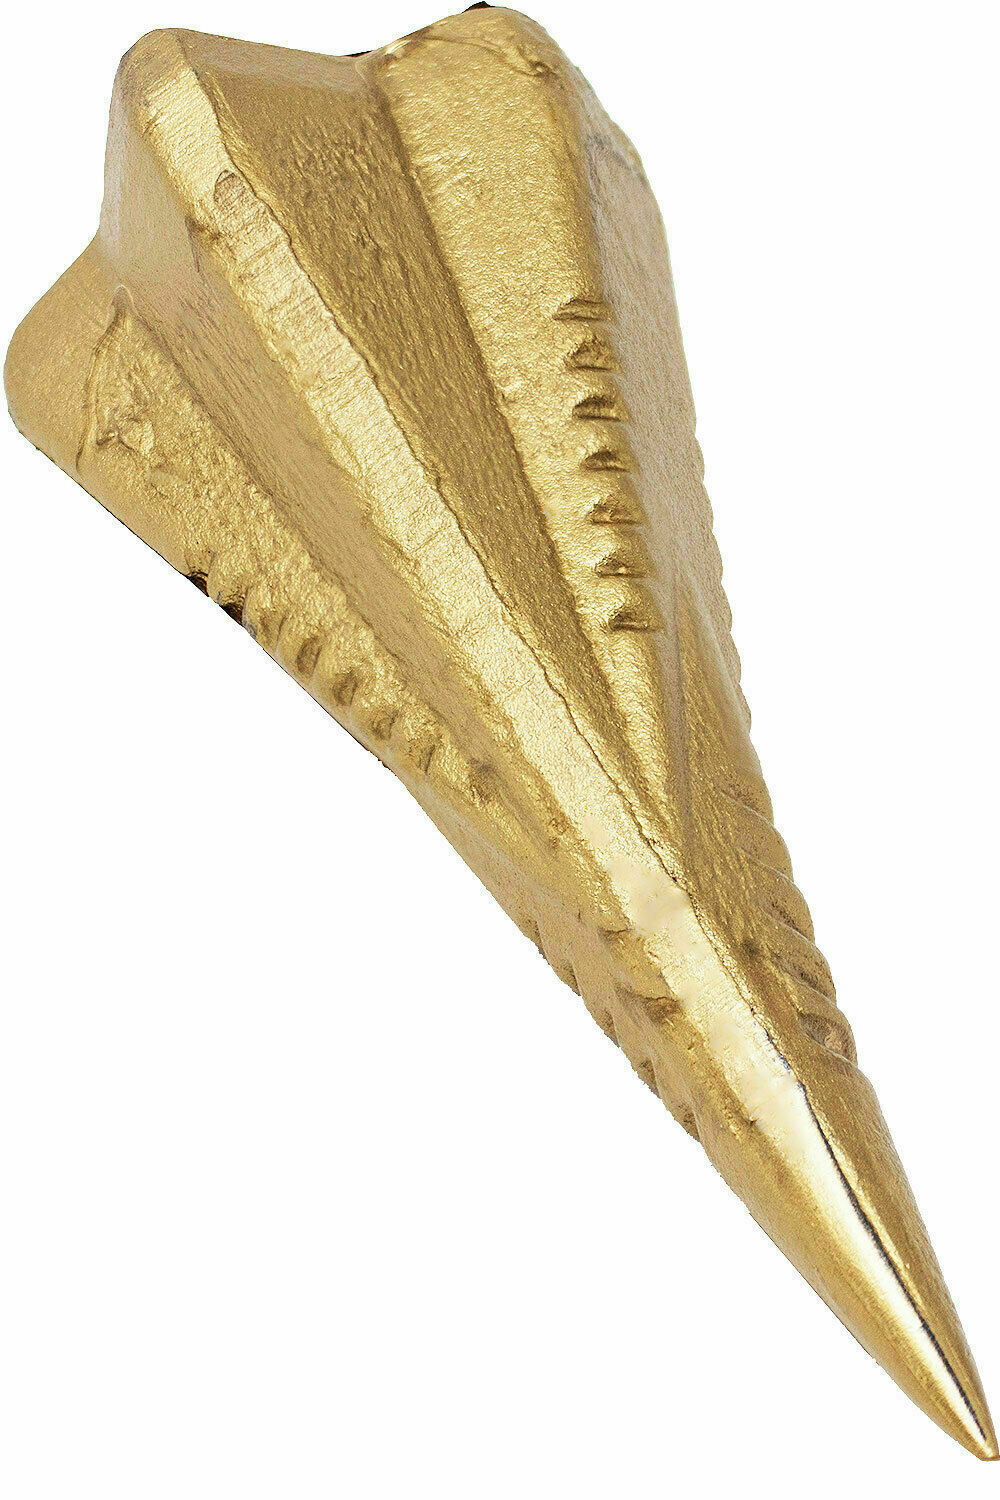 diamond shape log splitting wedge manual wood